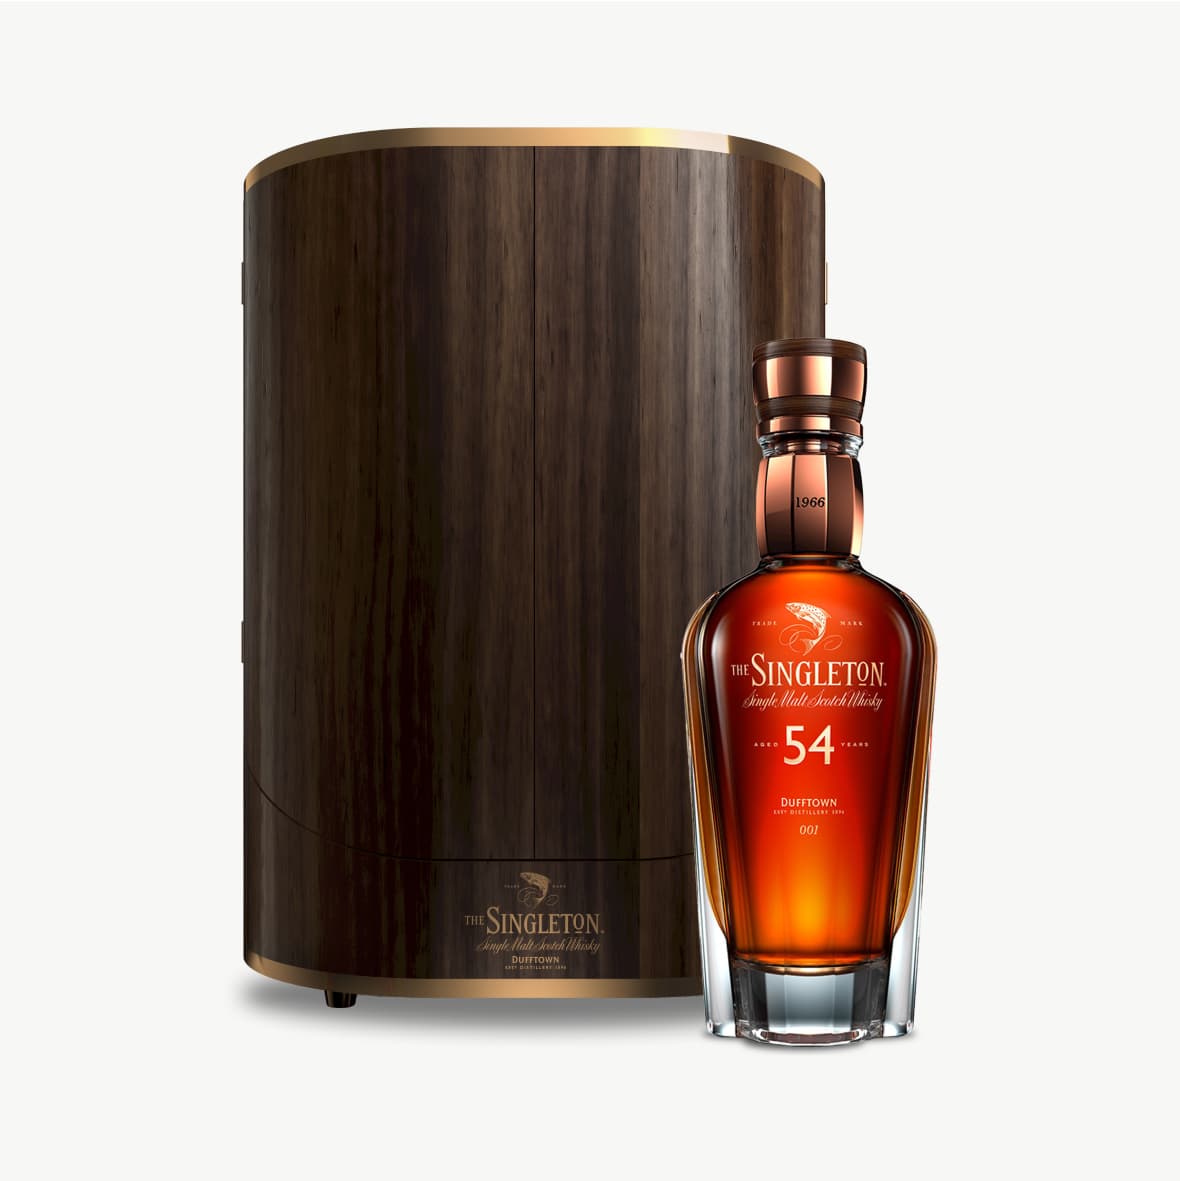 Singleton 54 whisky bottle next to wooden case